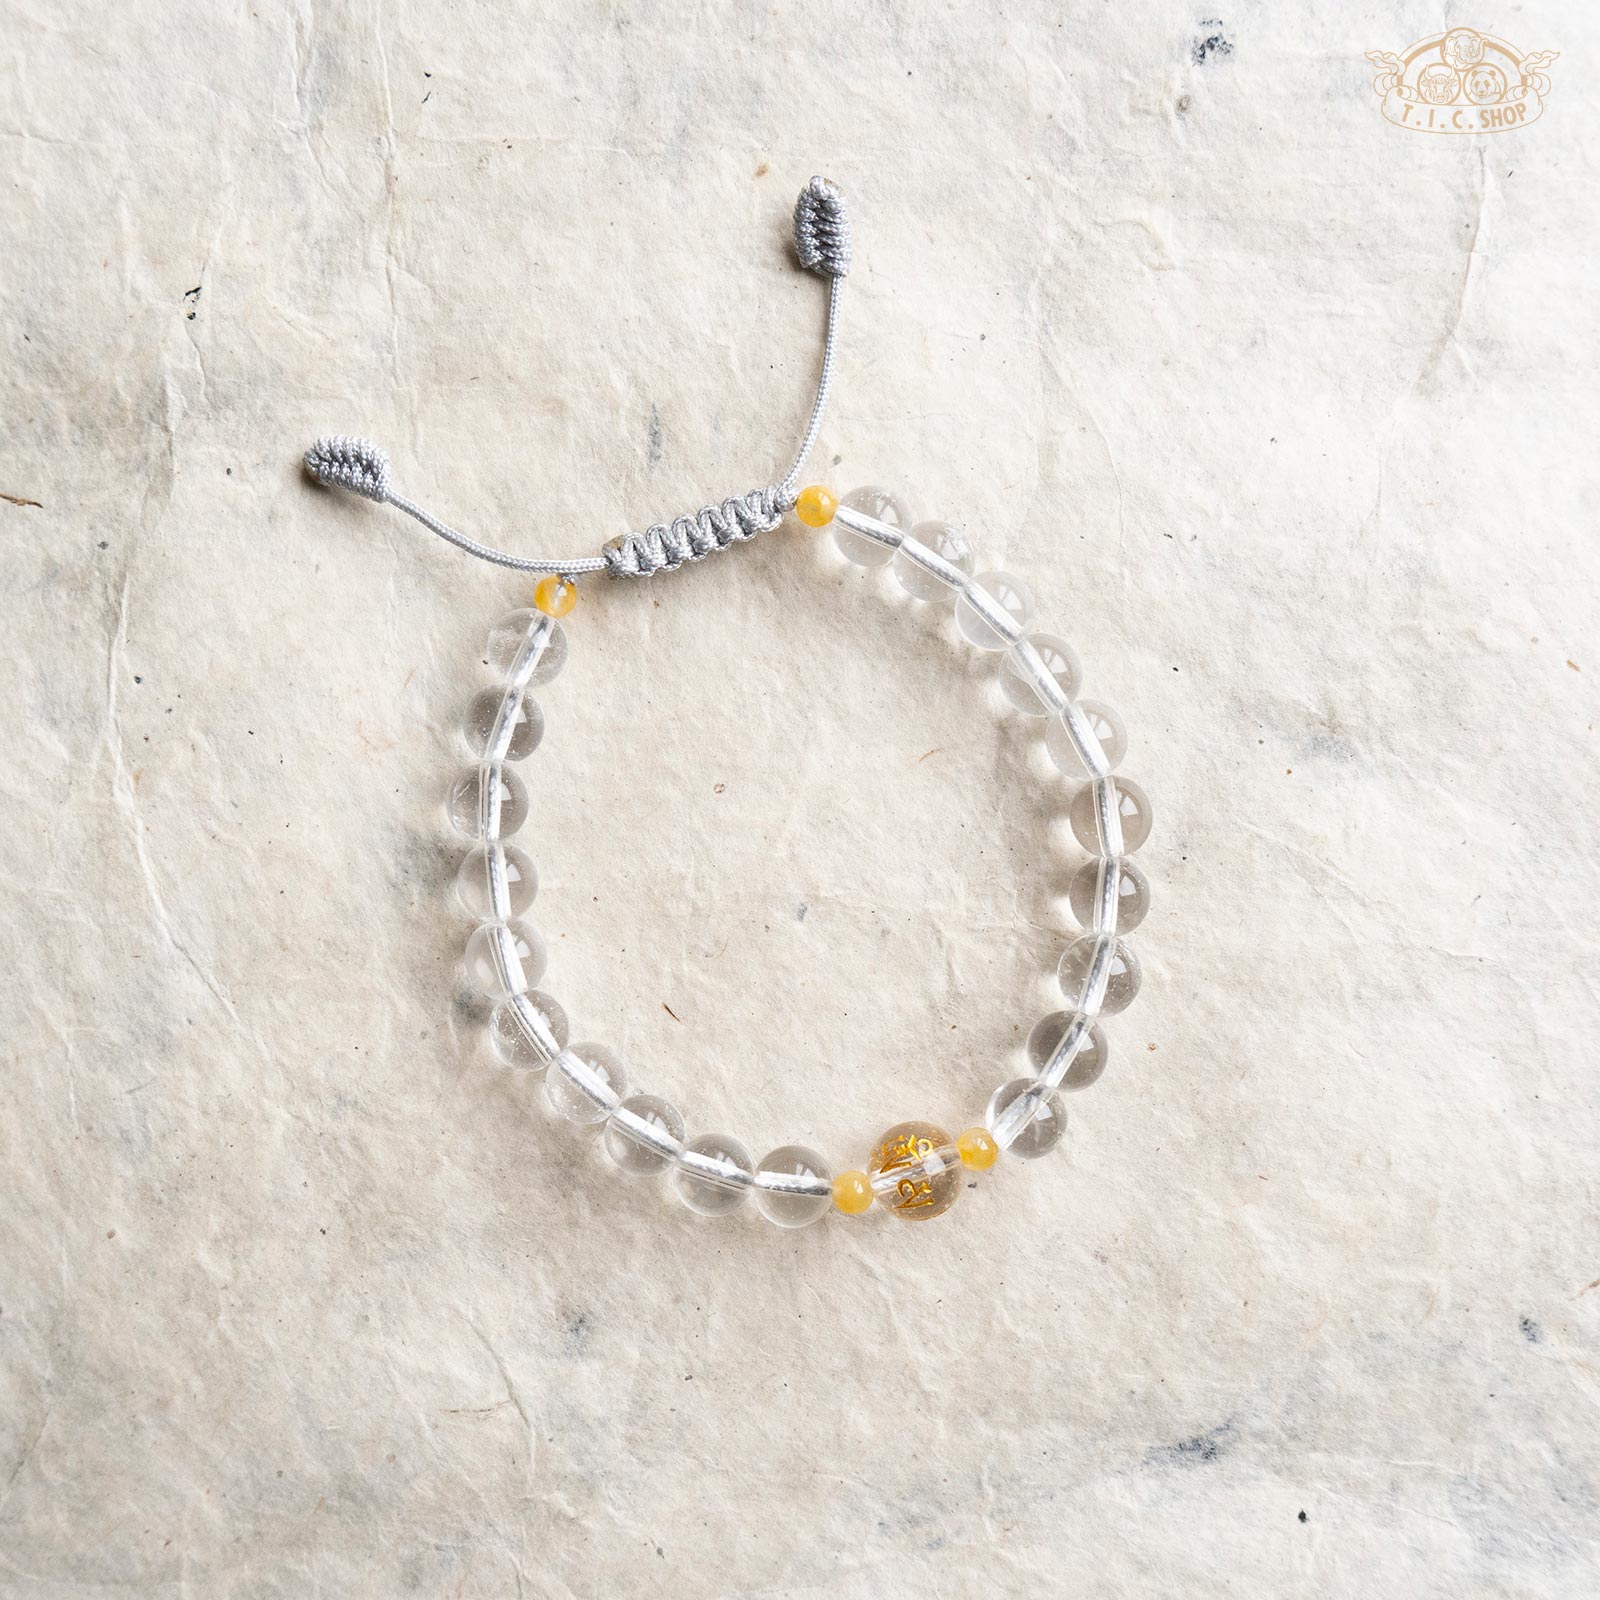 Clear Quartz 6mm Beads Bracelet with Om Mantra